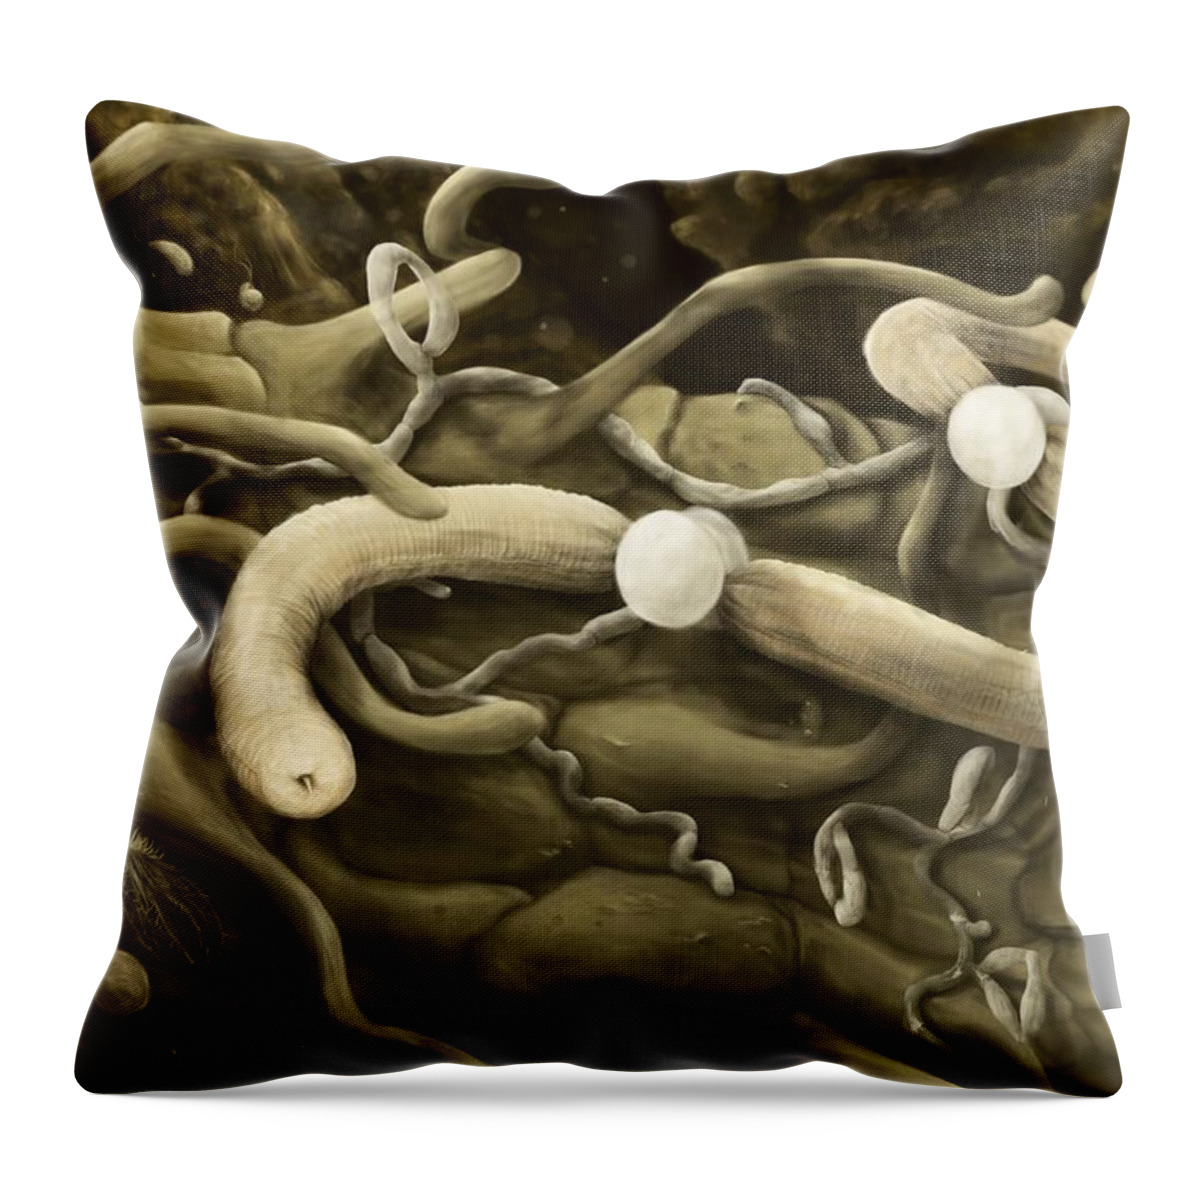 Nematode Throw Pillow featuring the digital art Nematode by Kate Solbakk